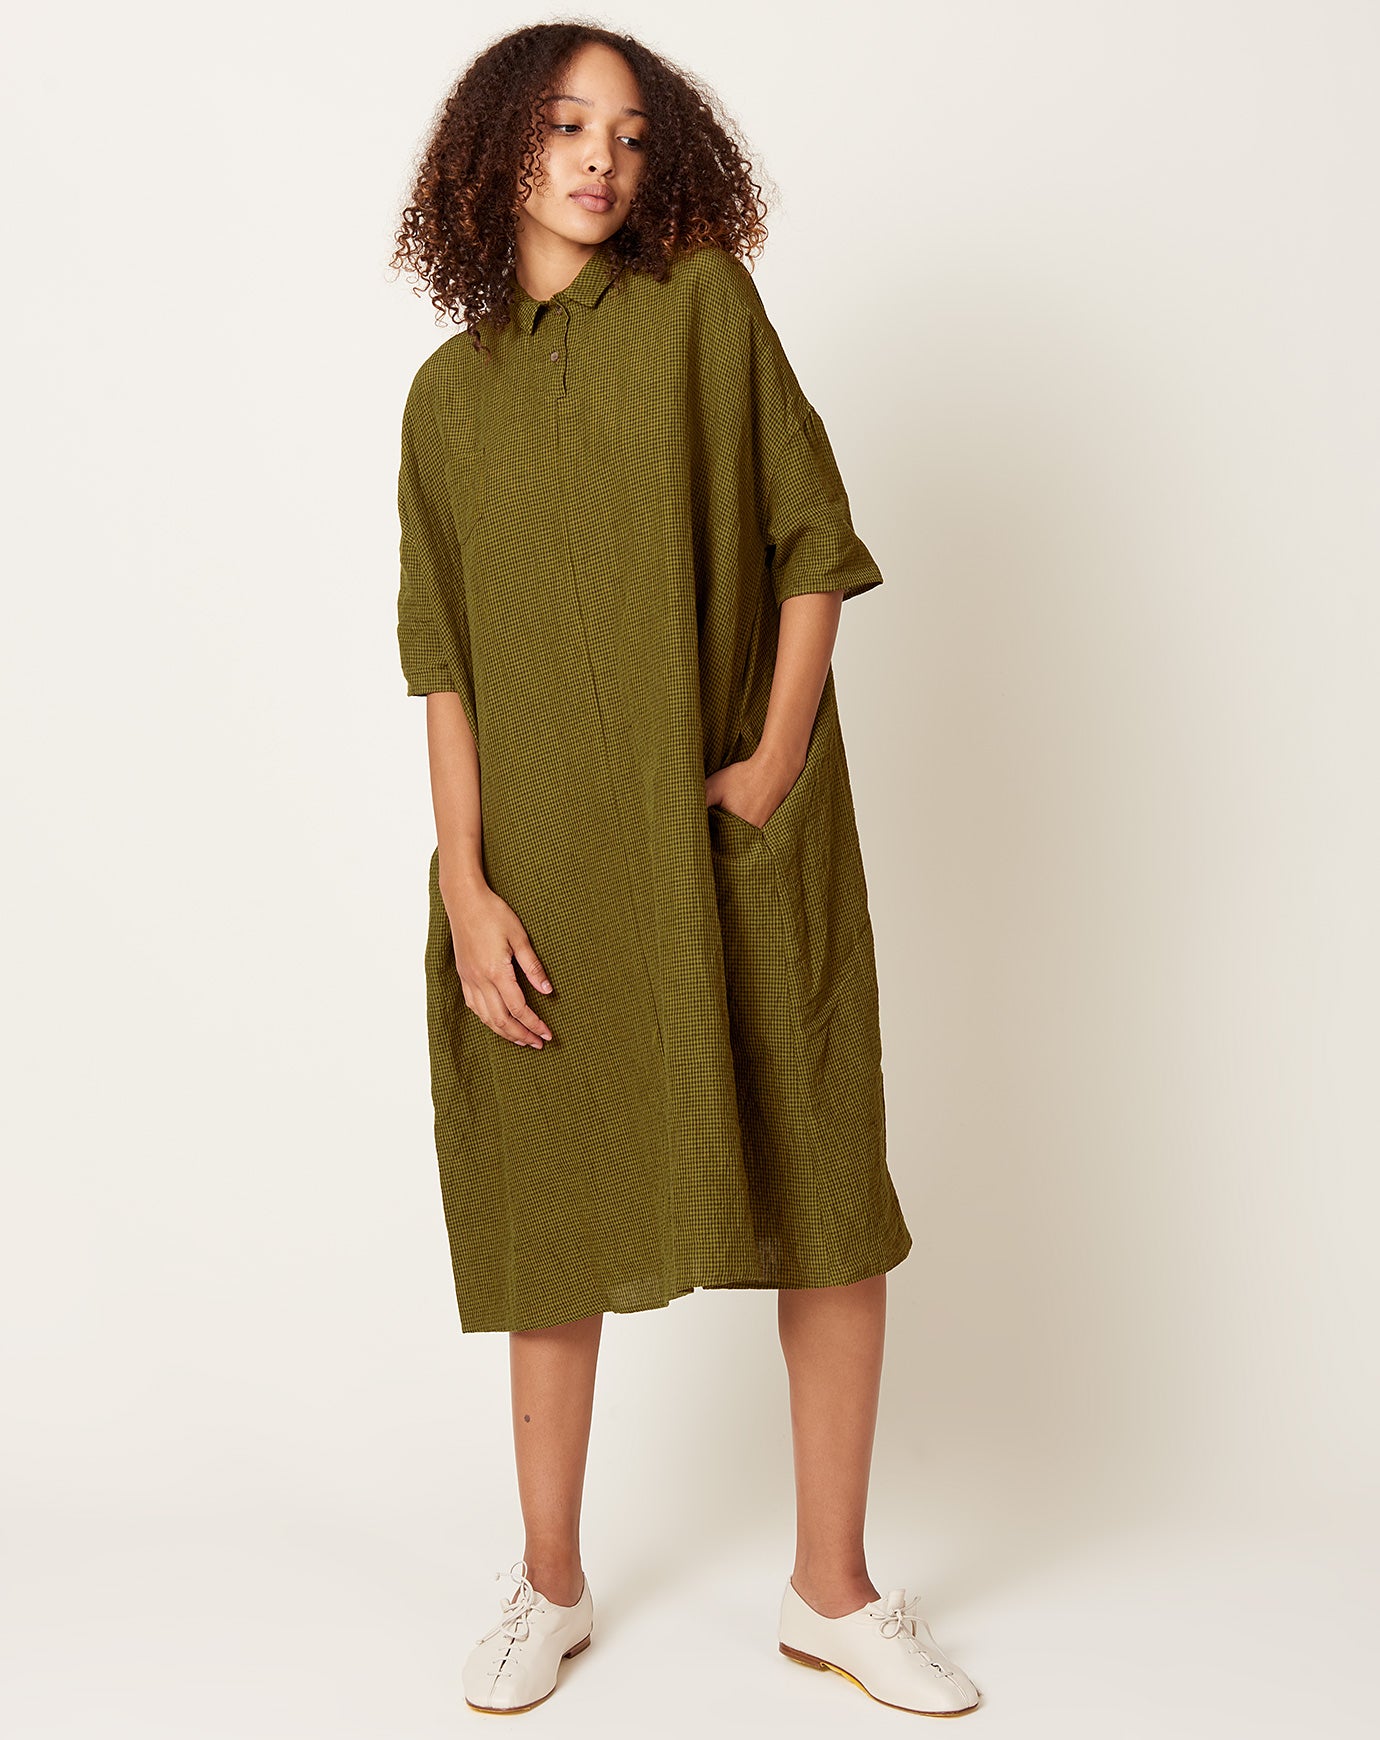 apuntob Micro Vichy Linen Dress in Grass Green & Military Green